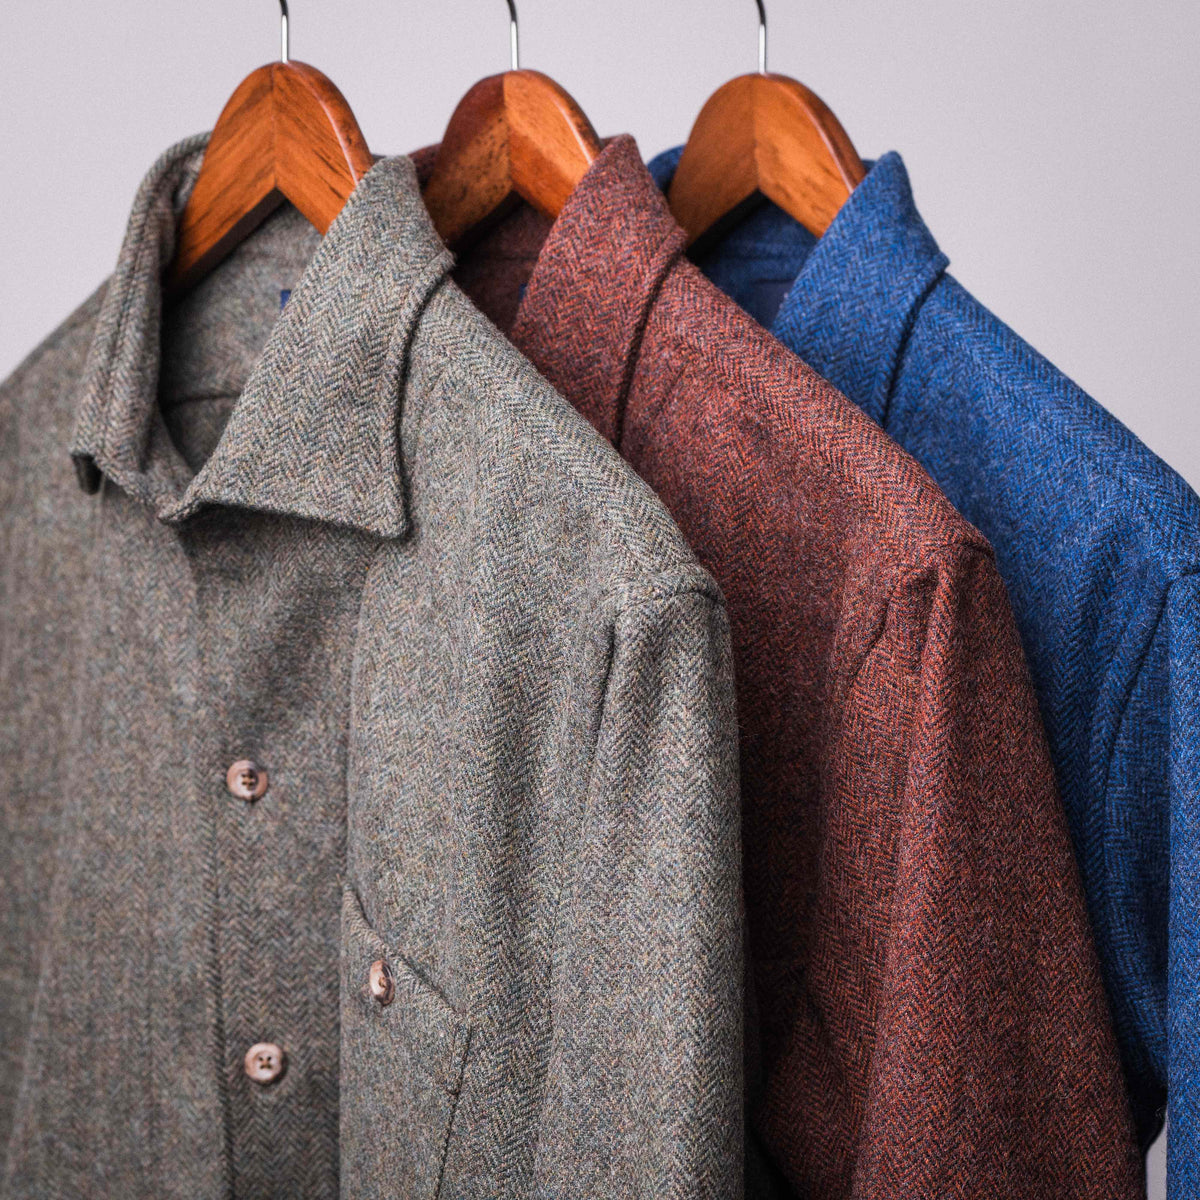 AWC Wool Tweed Rust Wye Shirt Jacket